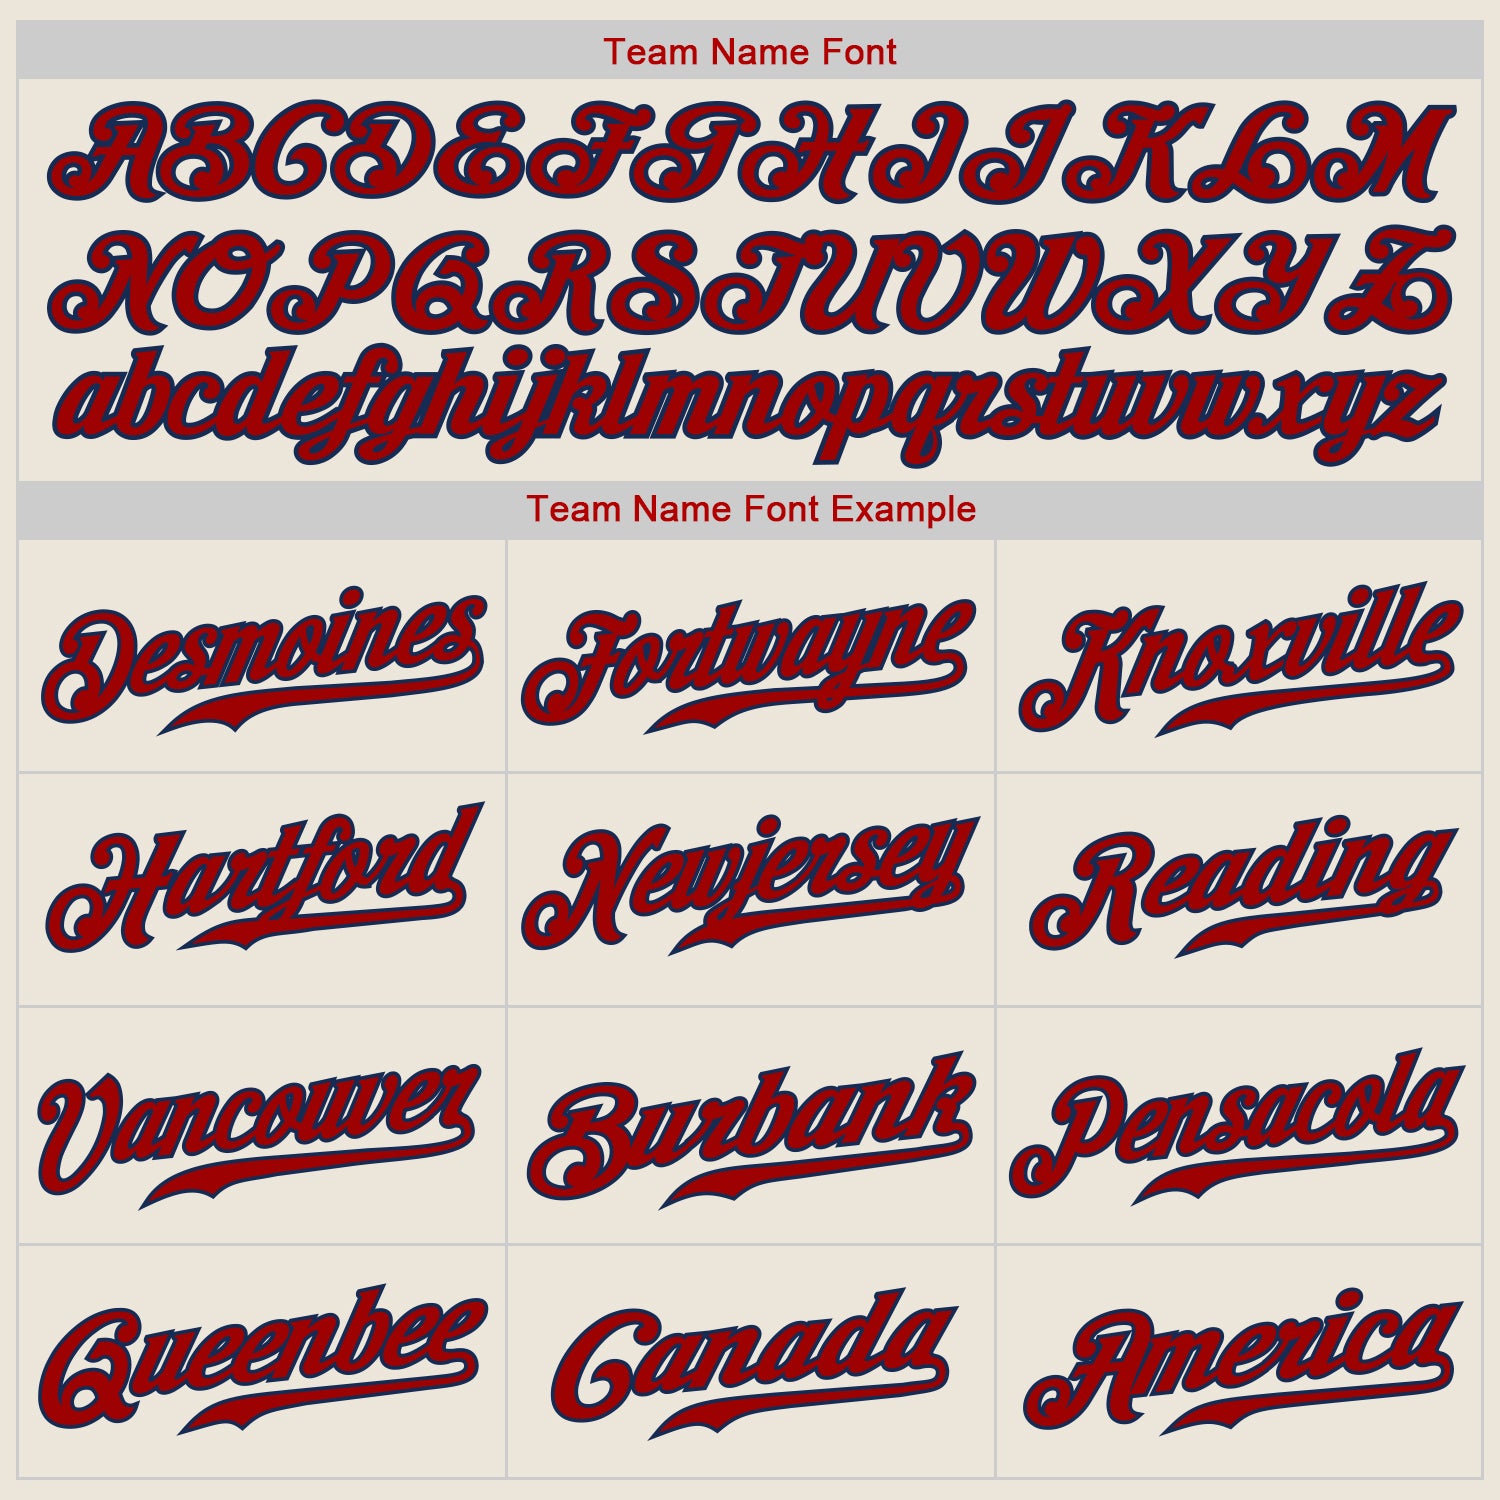 Sale Build Navy Baseball Authentic Cream Jersey Red – CustomJerseysPro